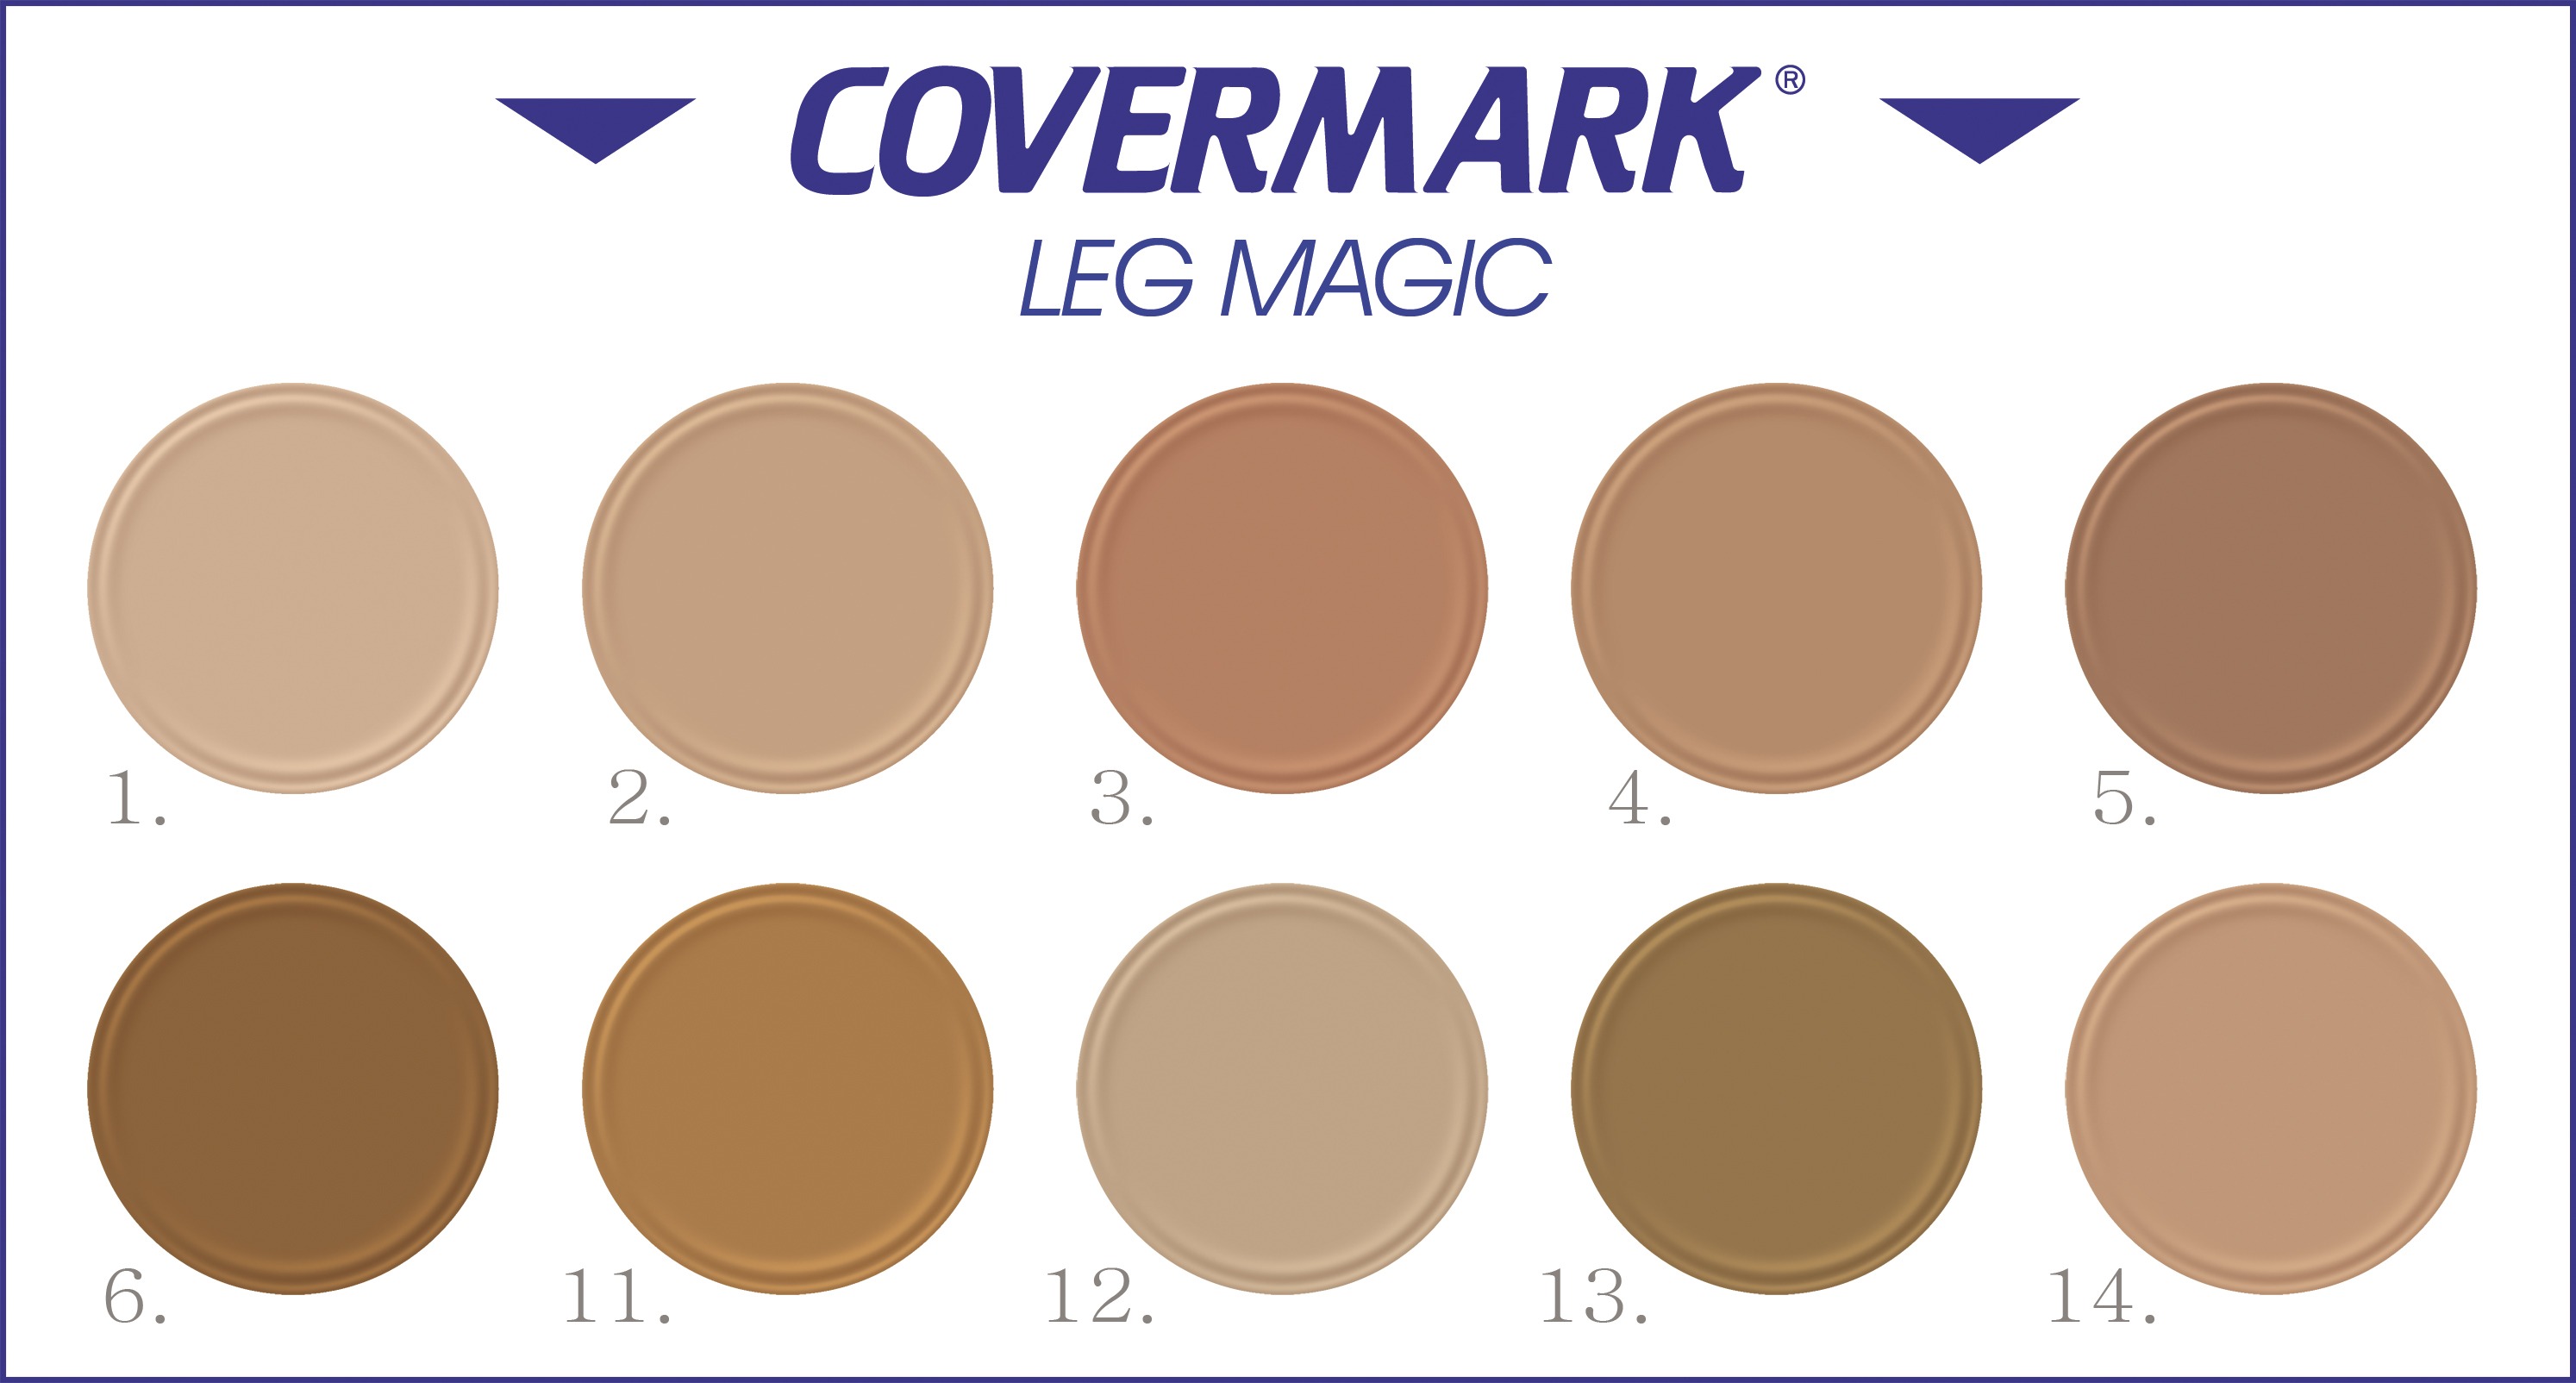 Covermark Camouflage Leg Magic Buy Online Bioport